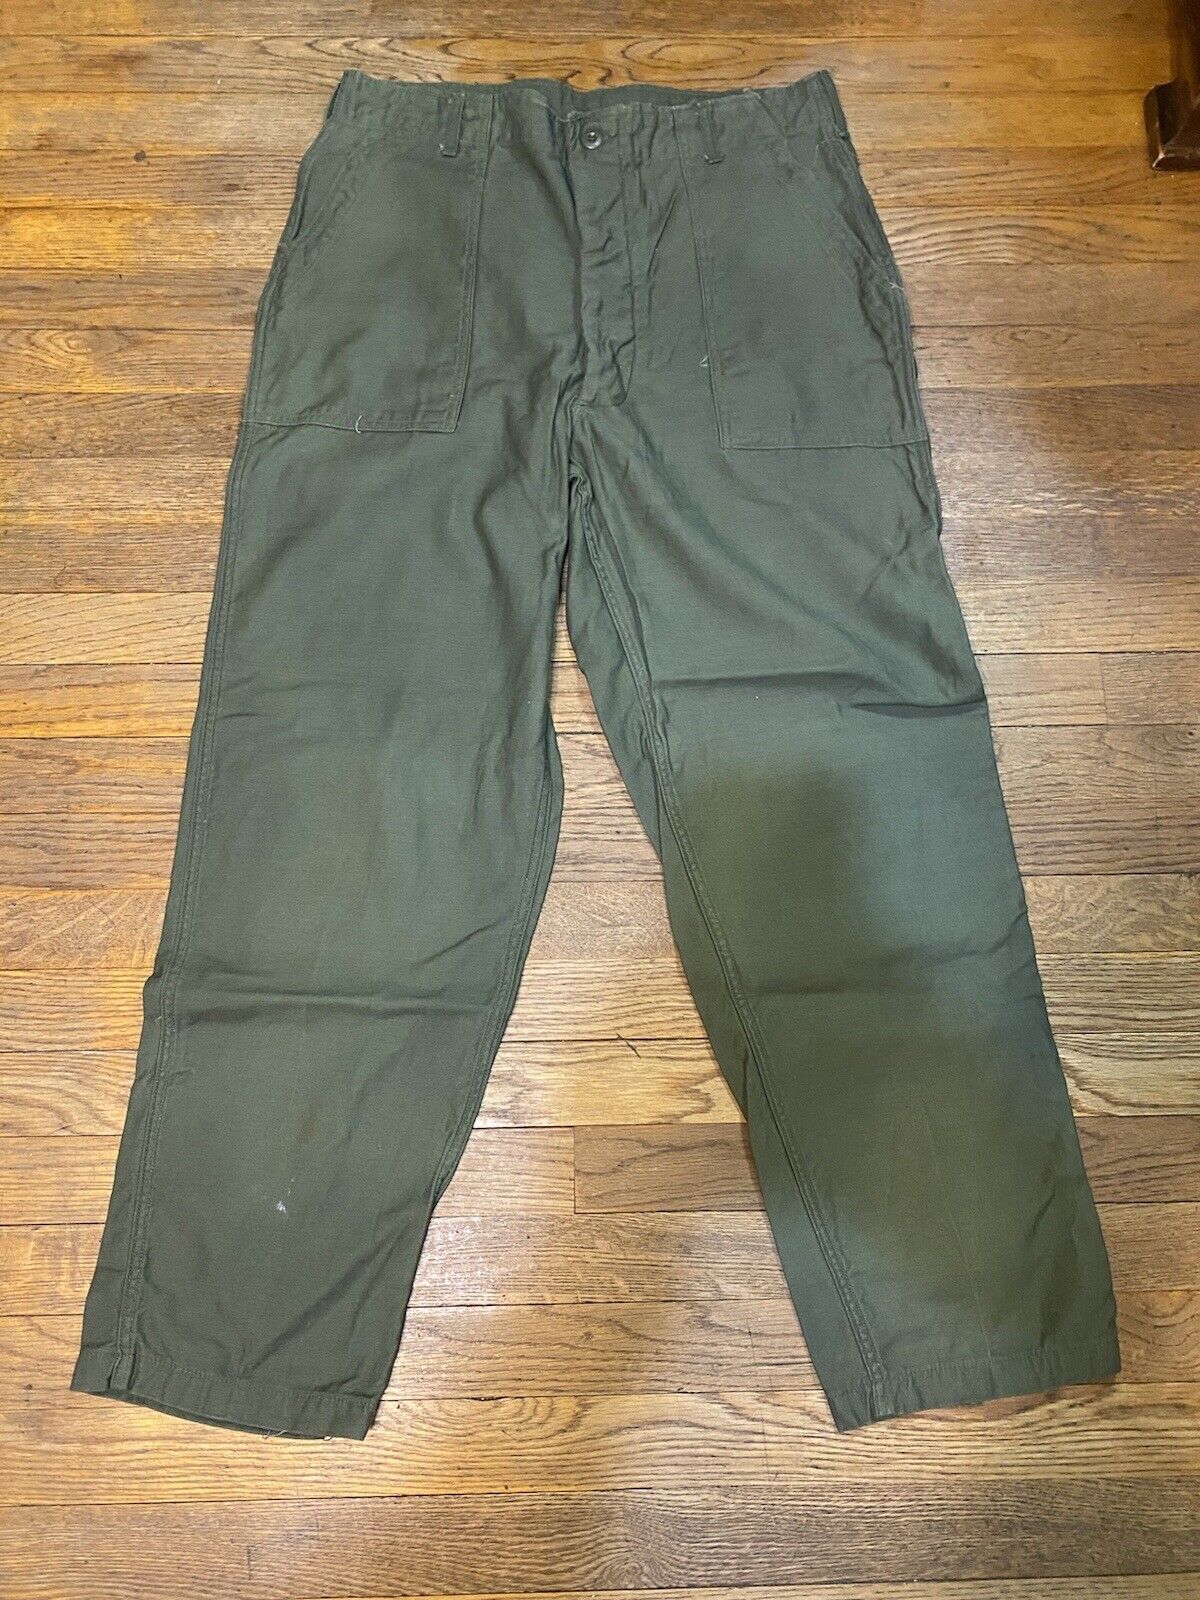 Vintage 70s Military Sateen Pants Trousers Vietnam Era OG-107 Army mens 38x31 US